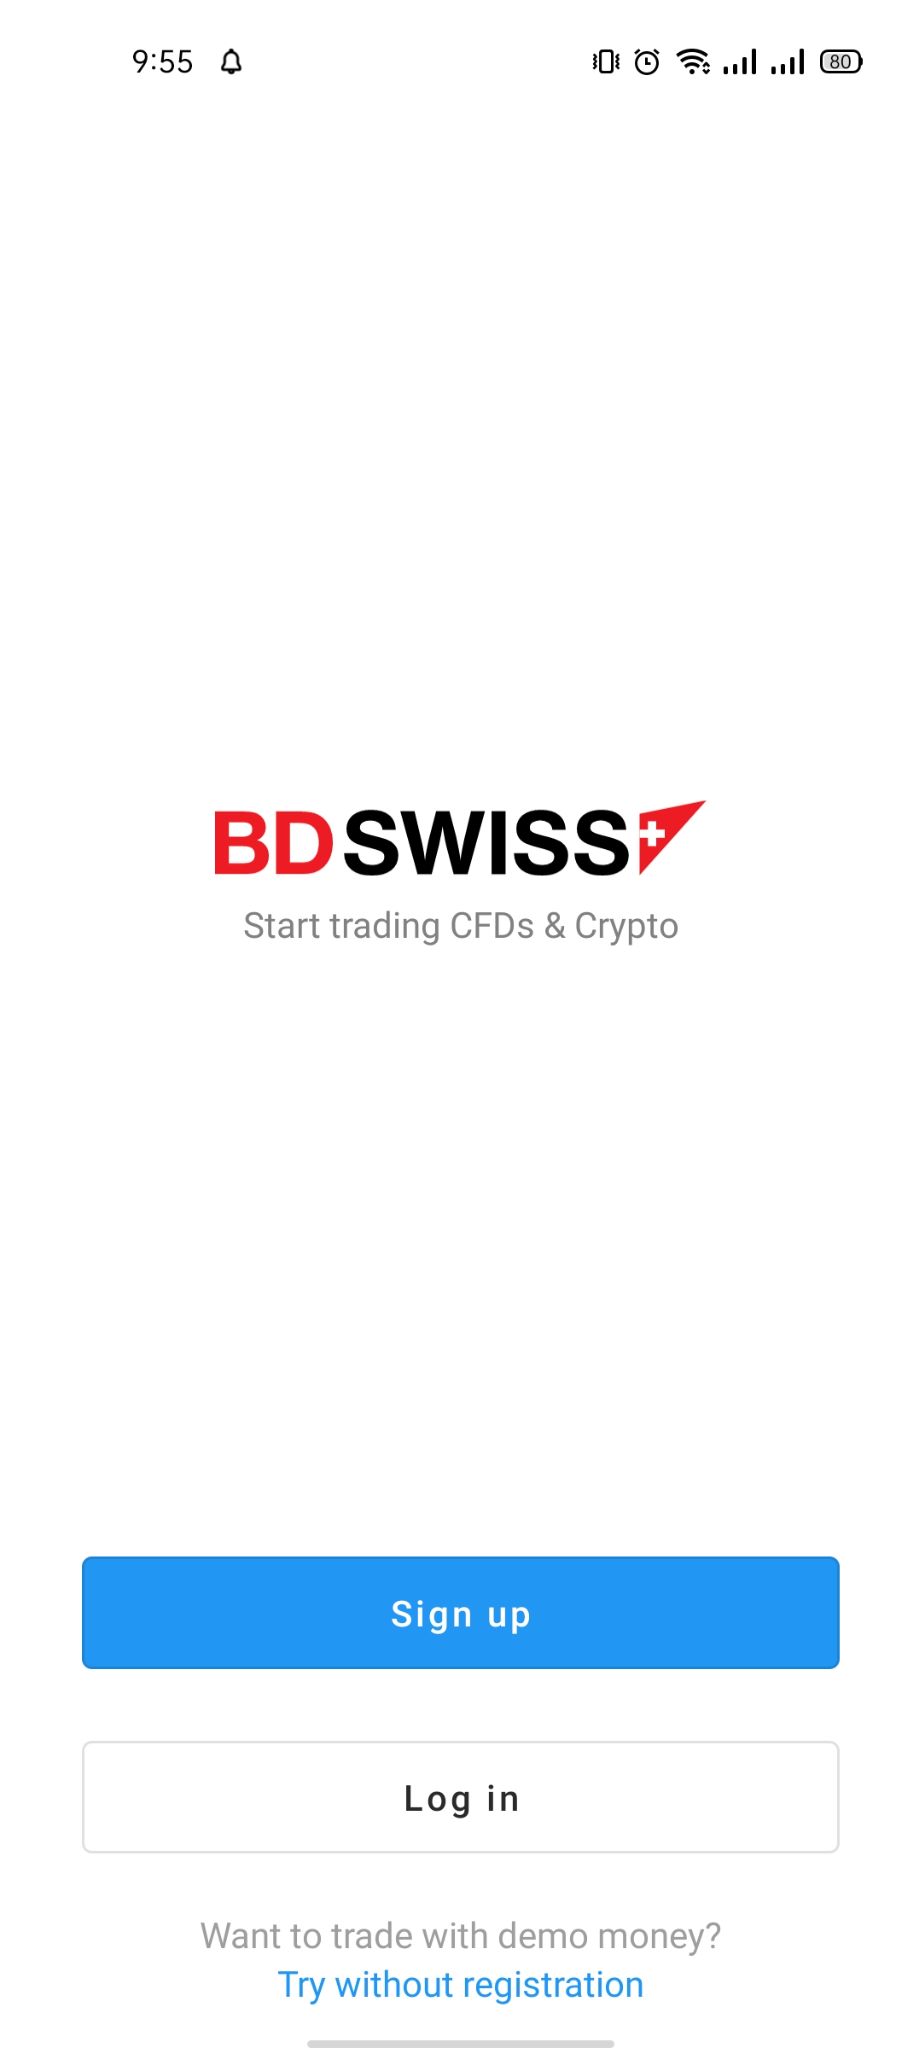 BDSwiss Platforms | How BDSwiss Platforms Work